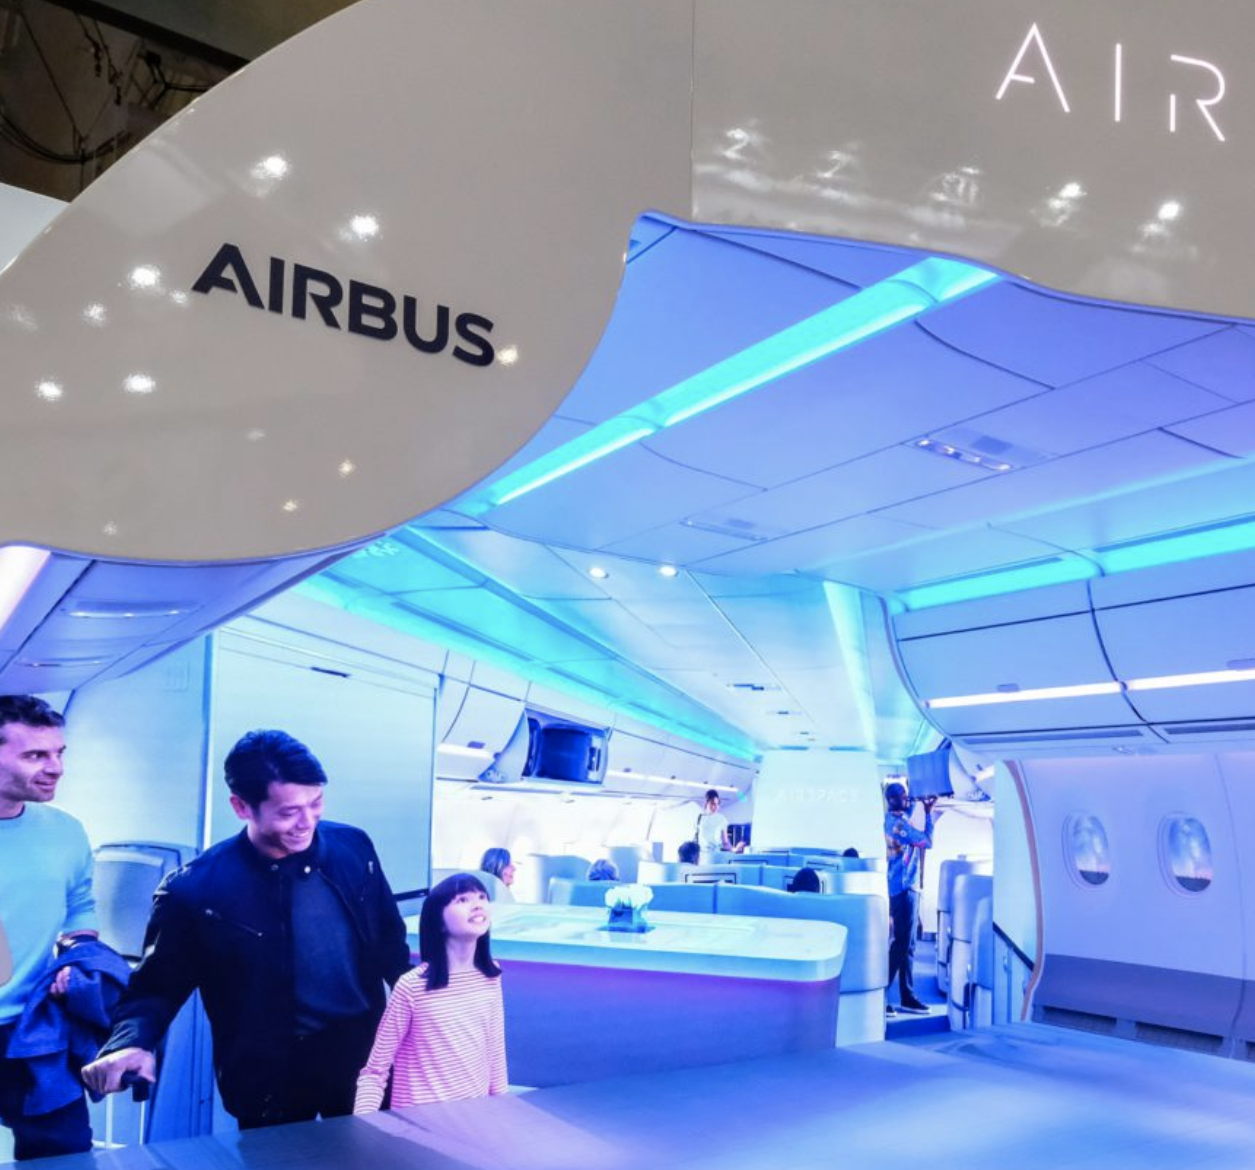 Airbus airspace interior at Dubai airahow